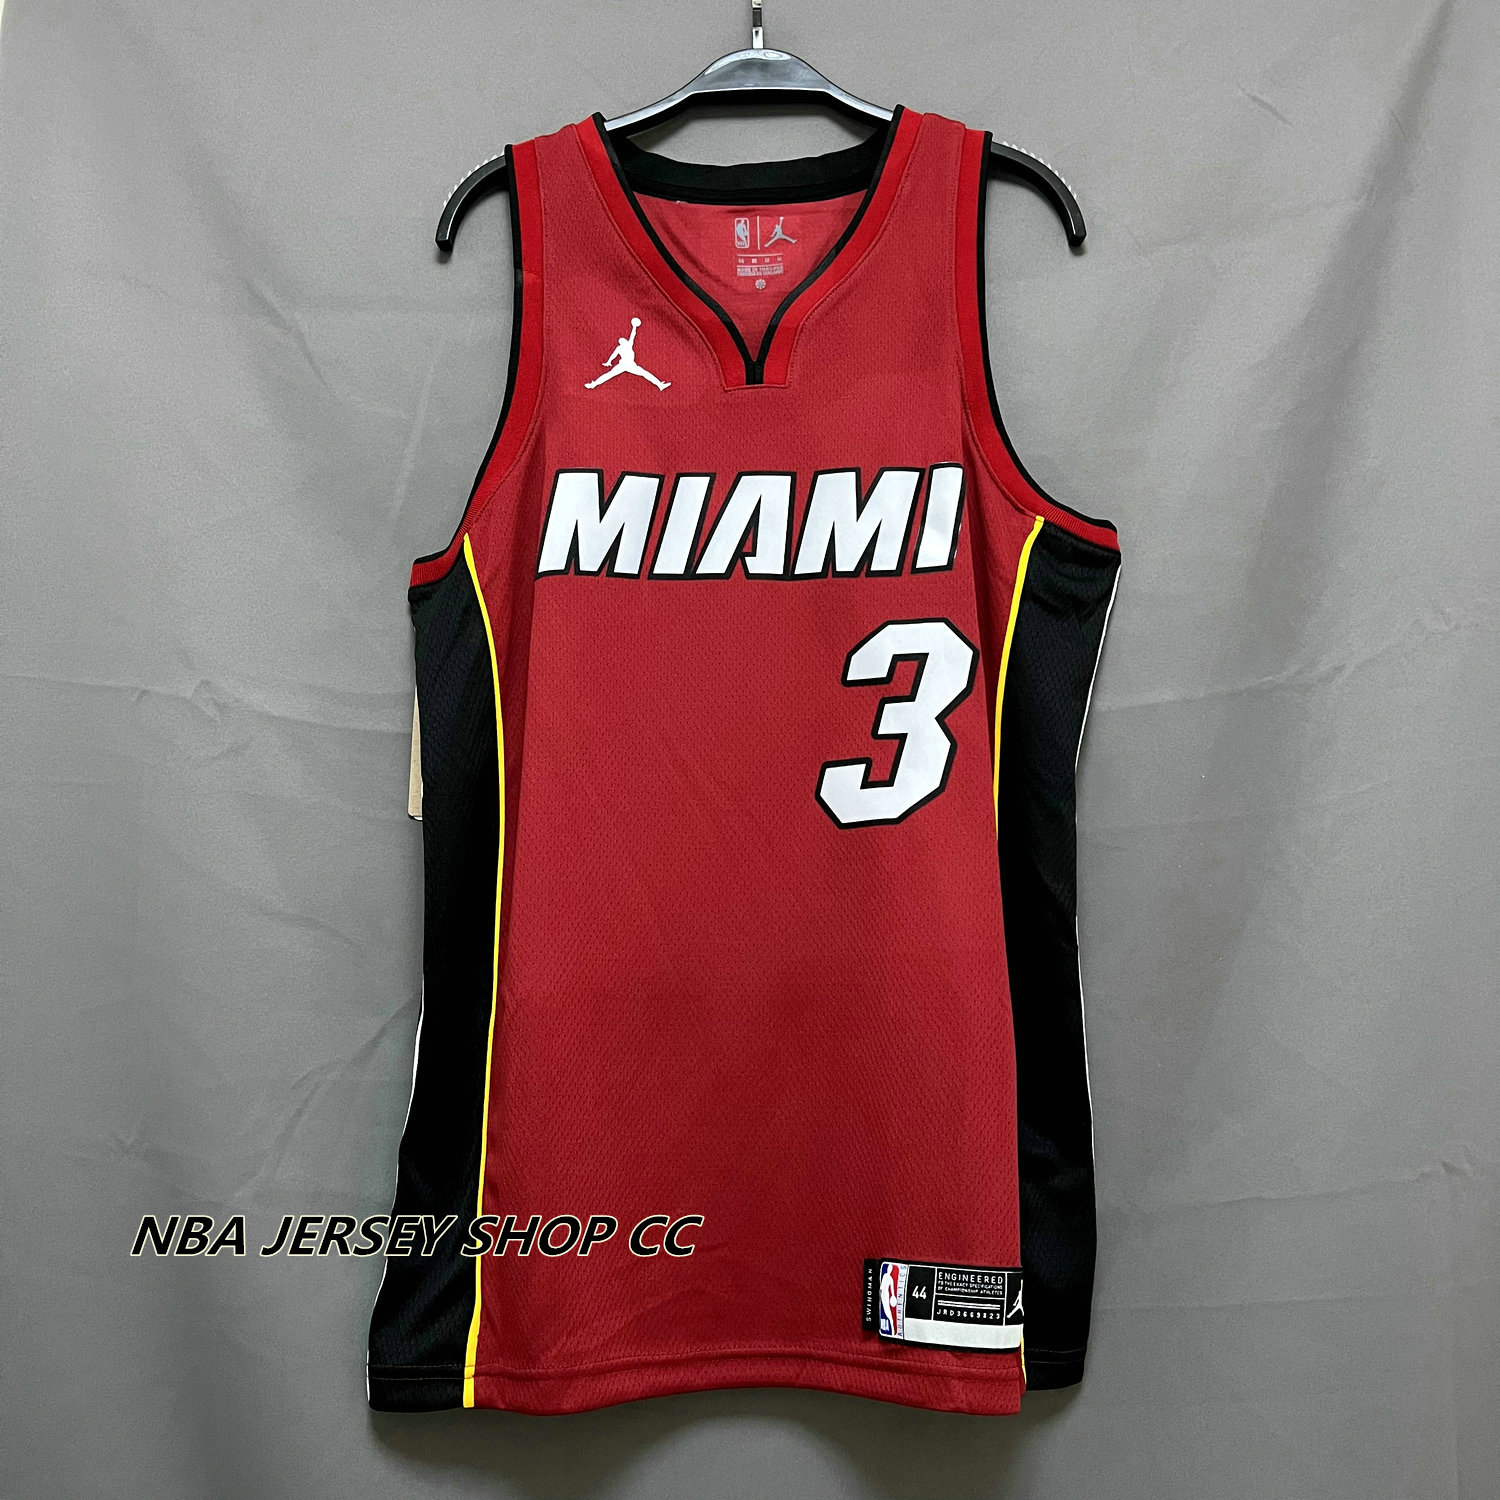 ZXY-FZLF Basketball Jersey Miami Heat #3 Dwyane Wade City Edition  Basketball Wear Stretch Breathable Quick Dry Fabric Fans  Sportswear,white,M/175~180cm : : Fashion